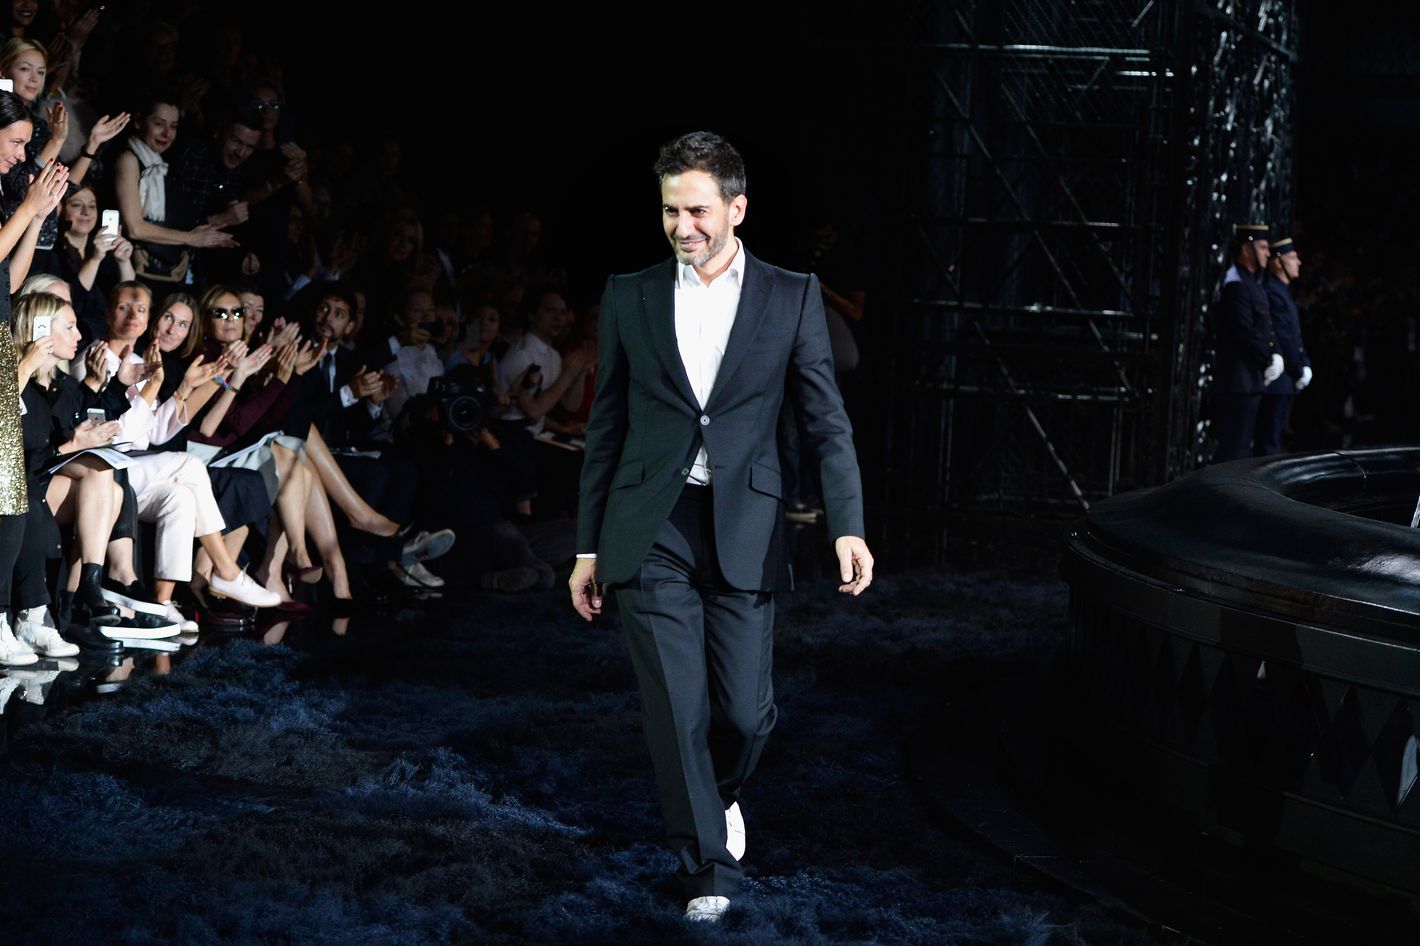 Marc Jacobs for Louis Vuitton - The end of a fashion era